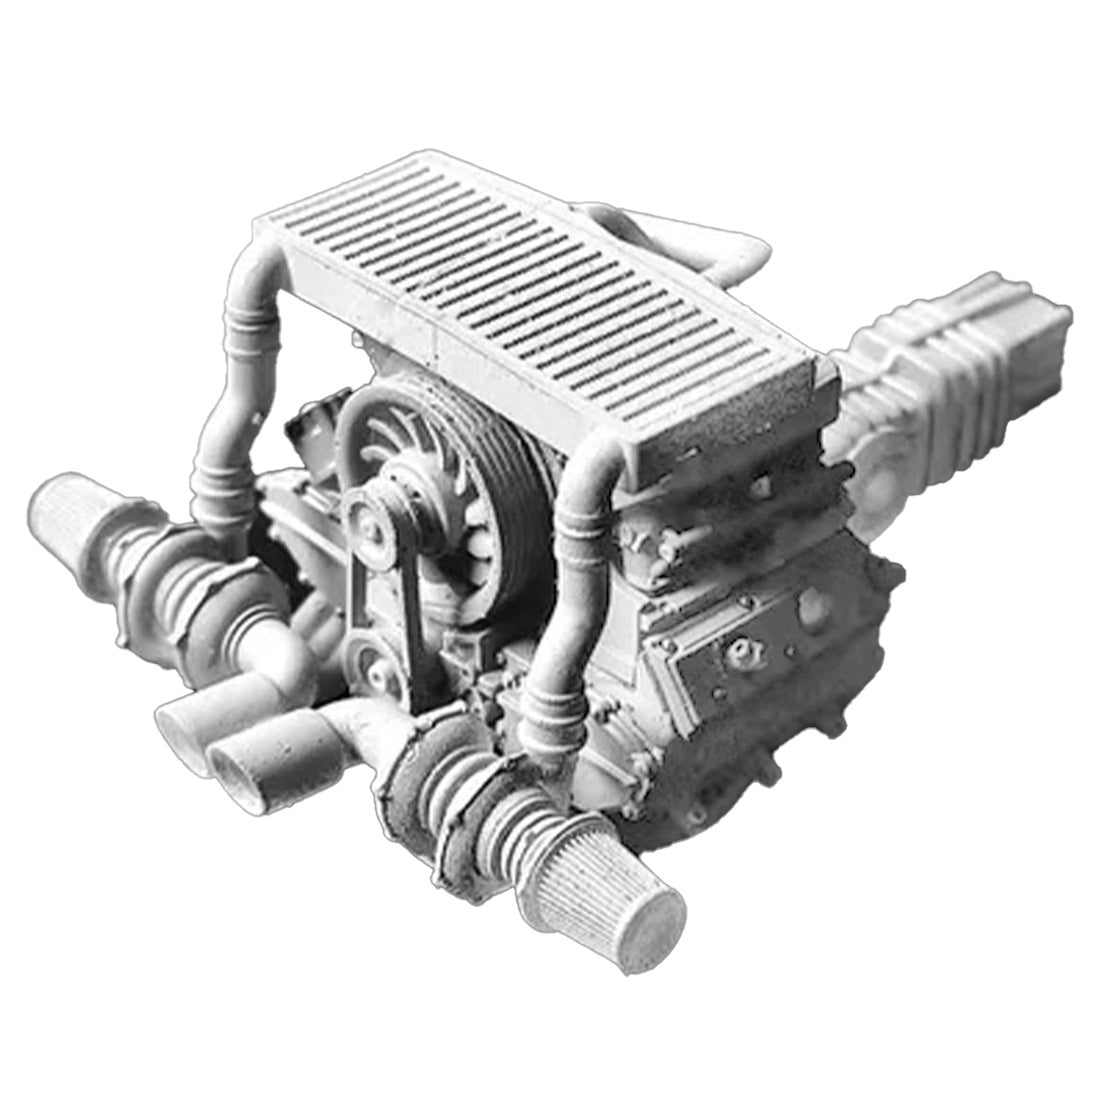 3D Printed Mini Flat-Six Cylinder Engine Model 1/24 Scale 35PCS (Reference Porsche 930 Engine)